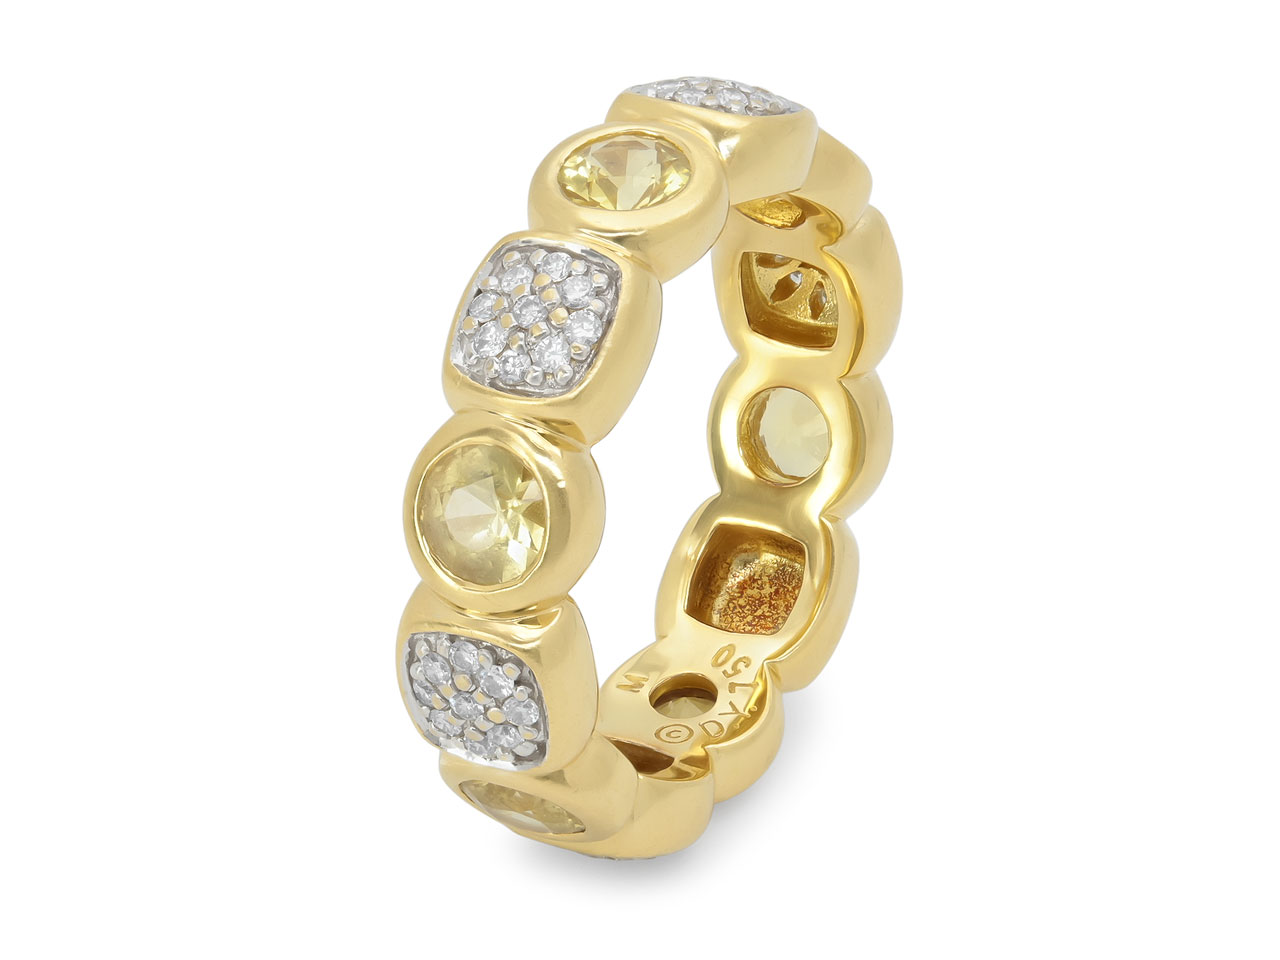 David Yurman 'Chiclet' Diamond and Citrine Ring in 18K Gold